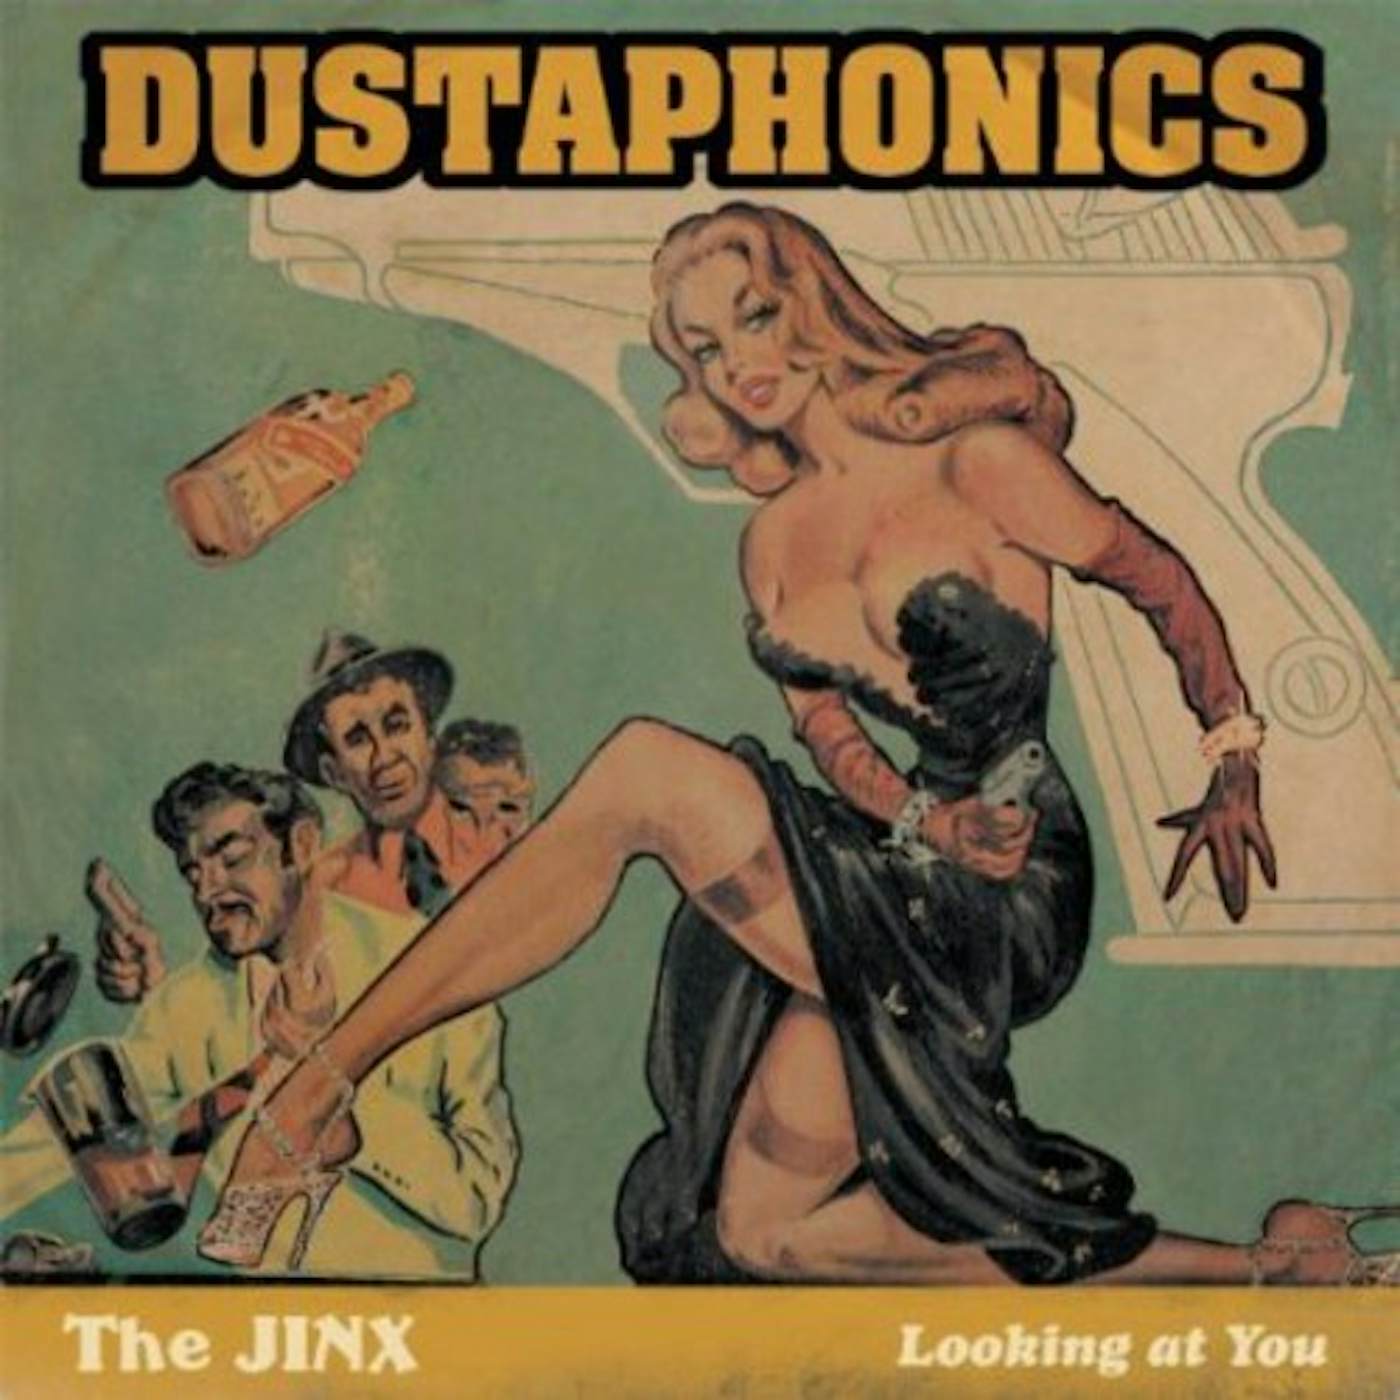 The Dustaphonics JINX Vinyl Record